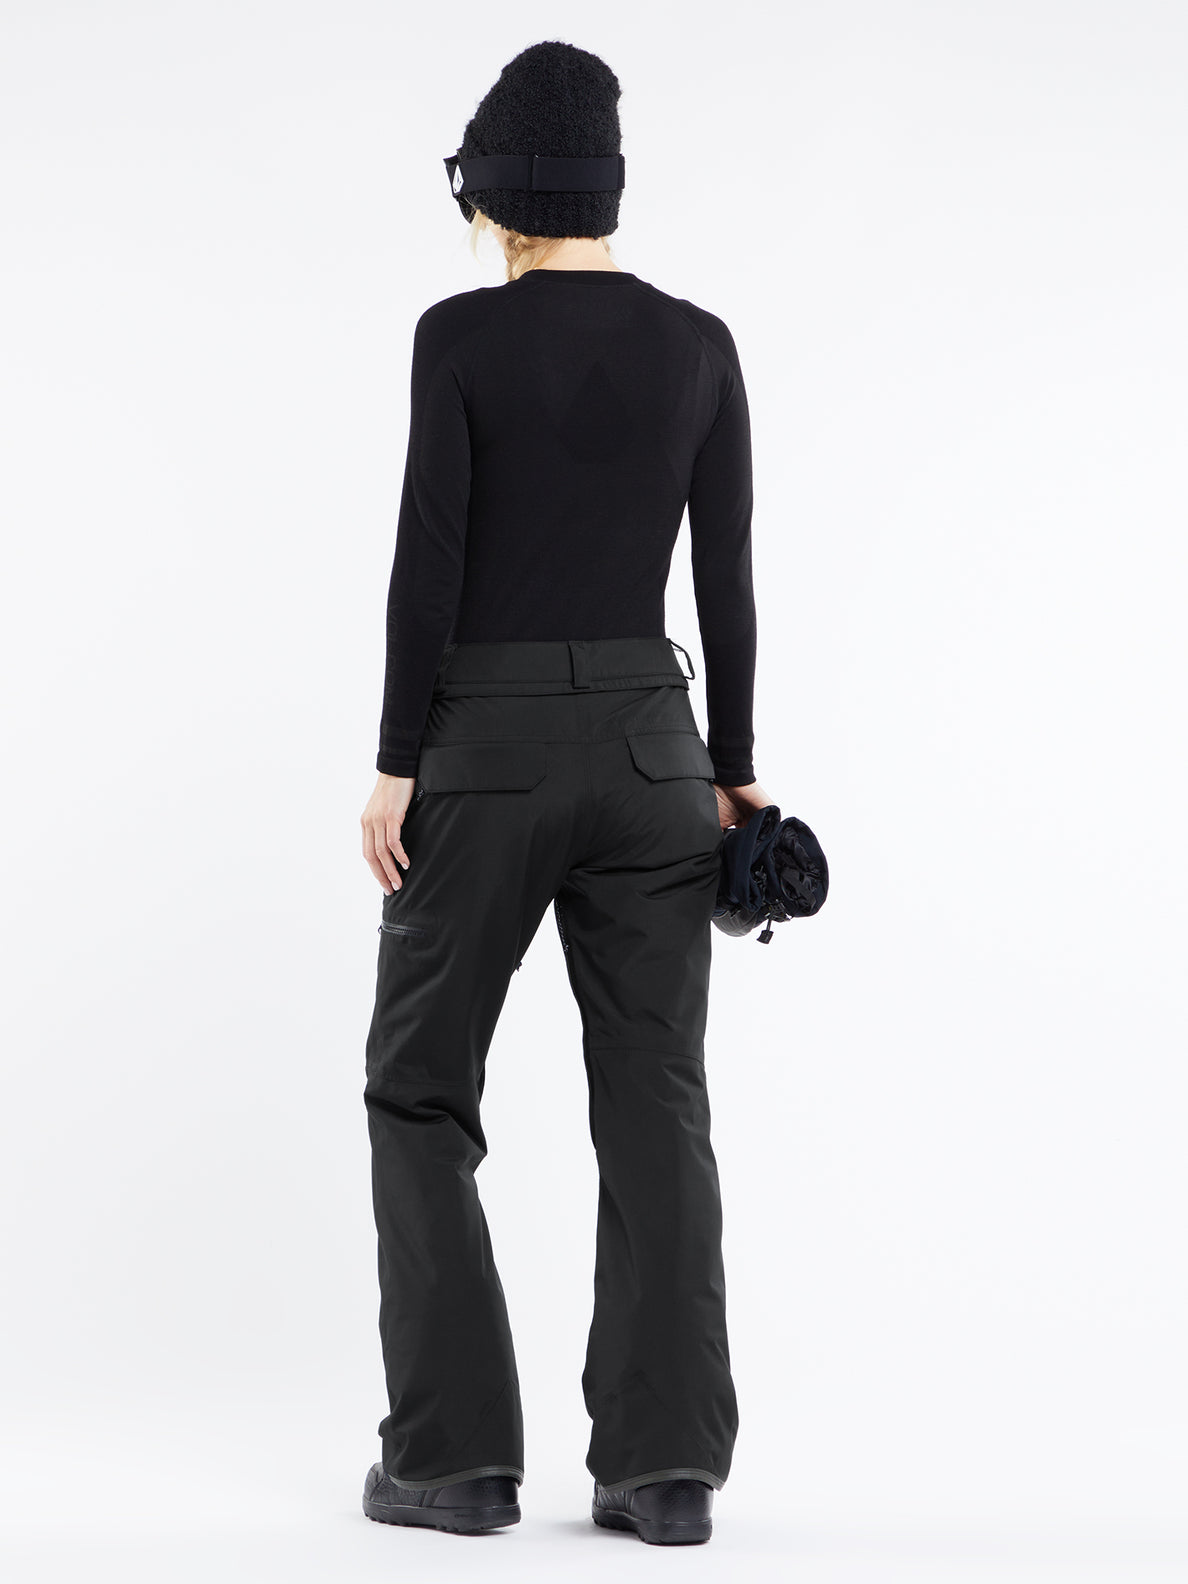 Black Yak GORE-TEX C-Knit Pants - Hardshell trousers Women's, Buy online